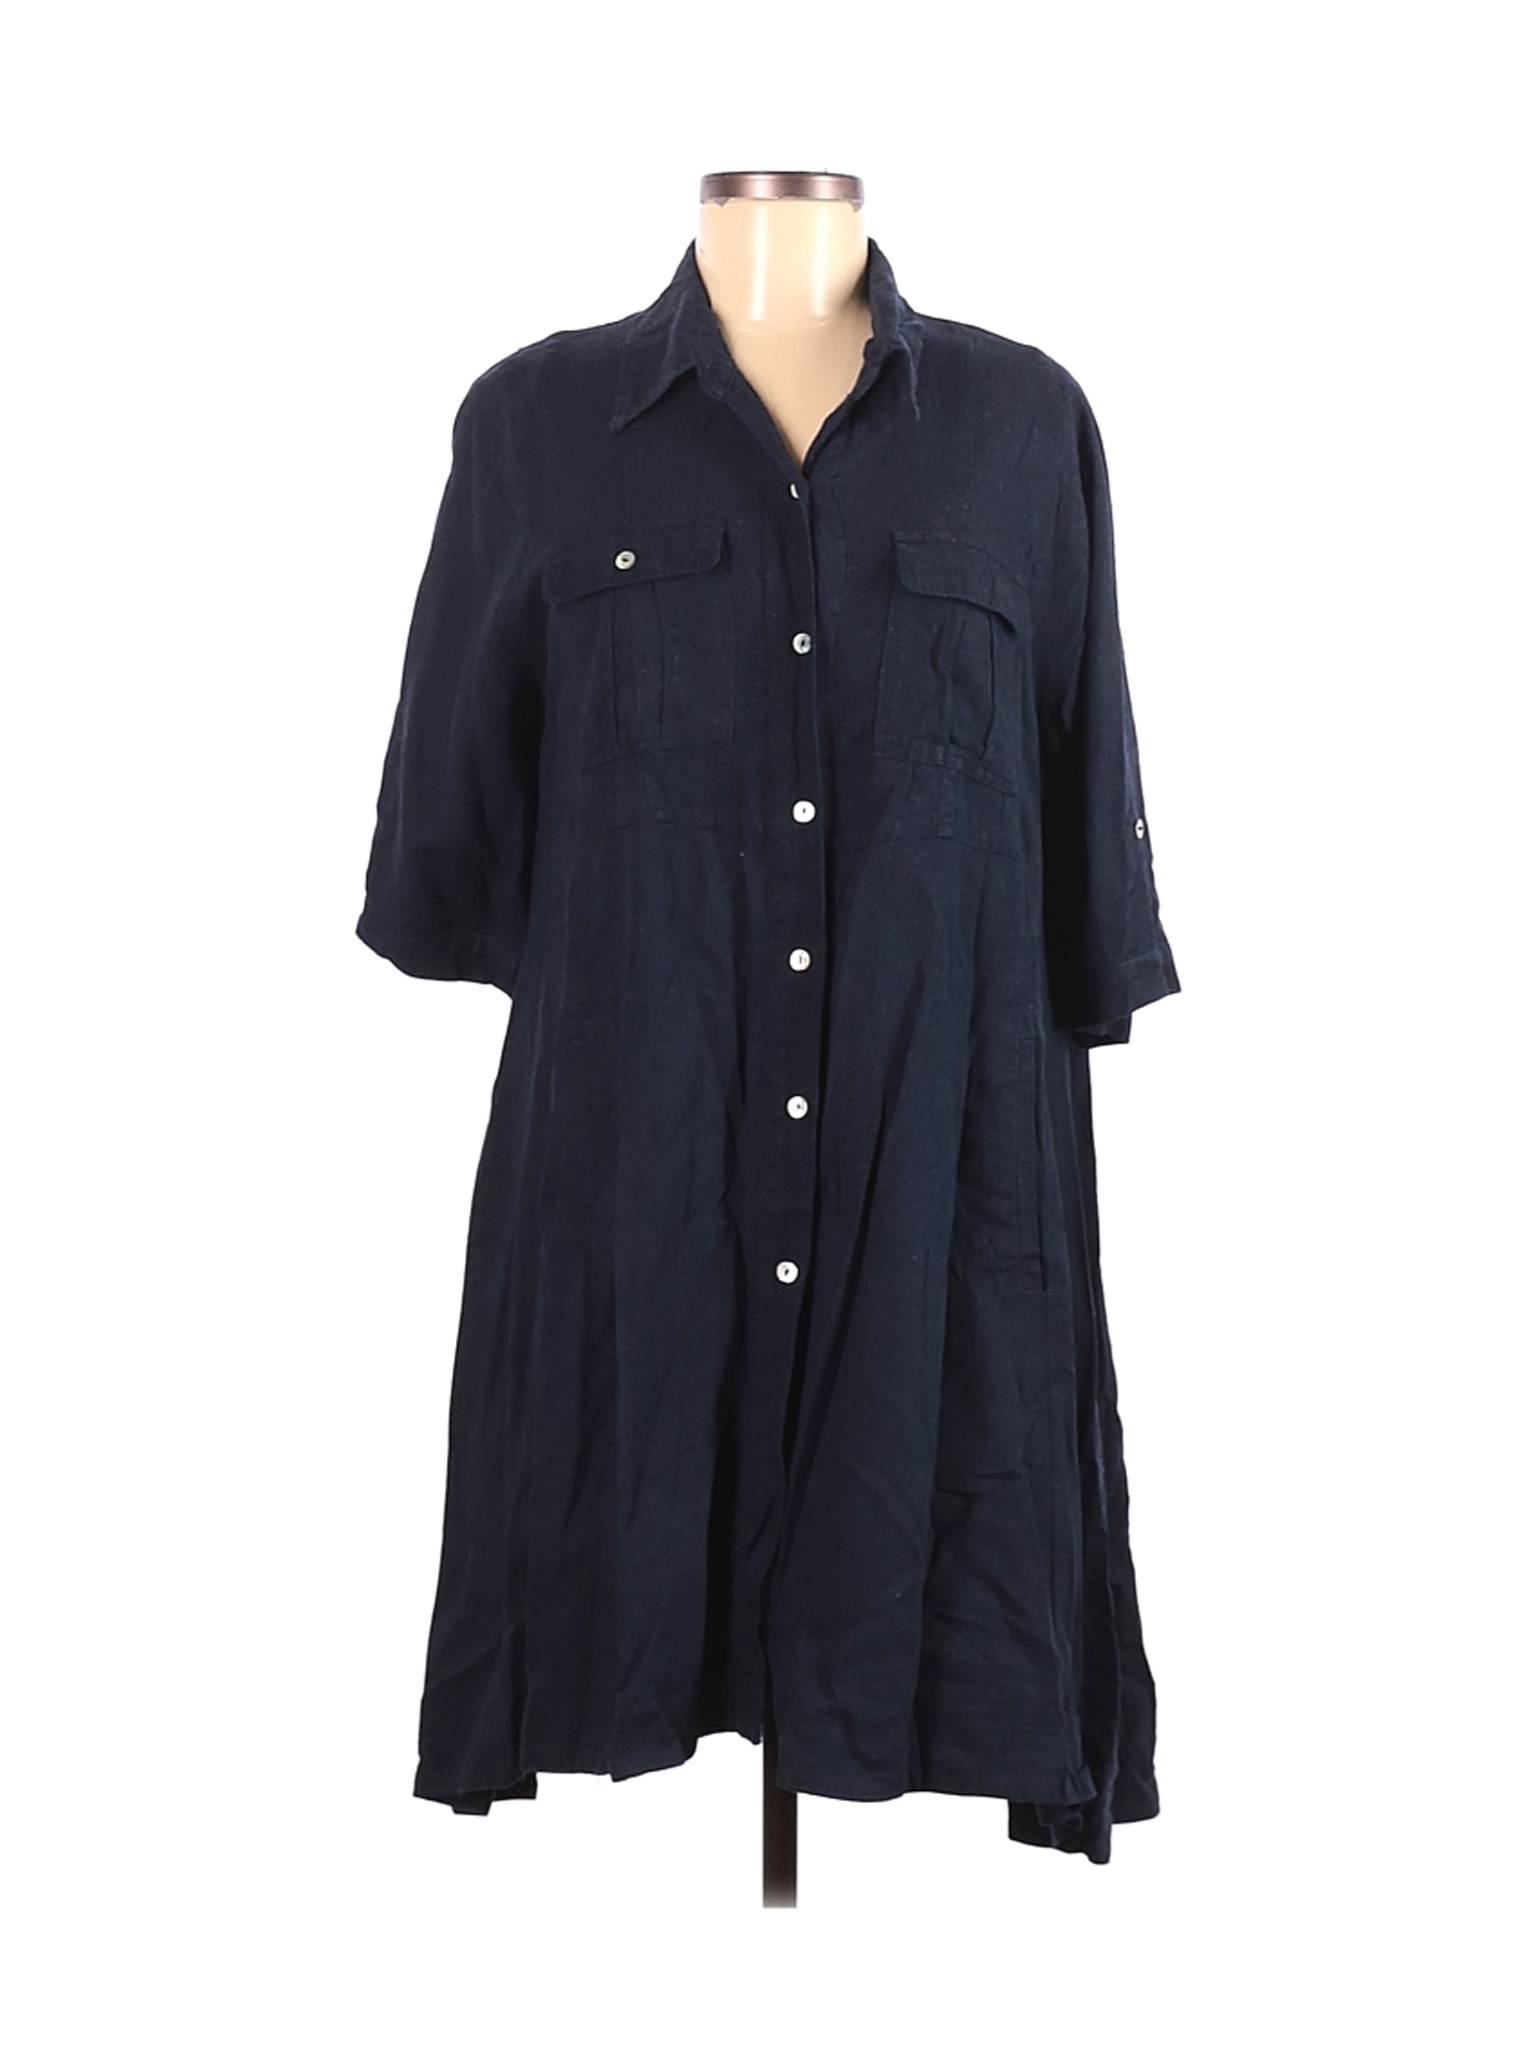 Just Living Women Blue Casual Dress M | eBay